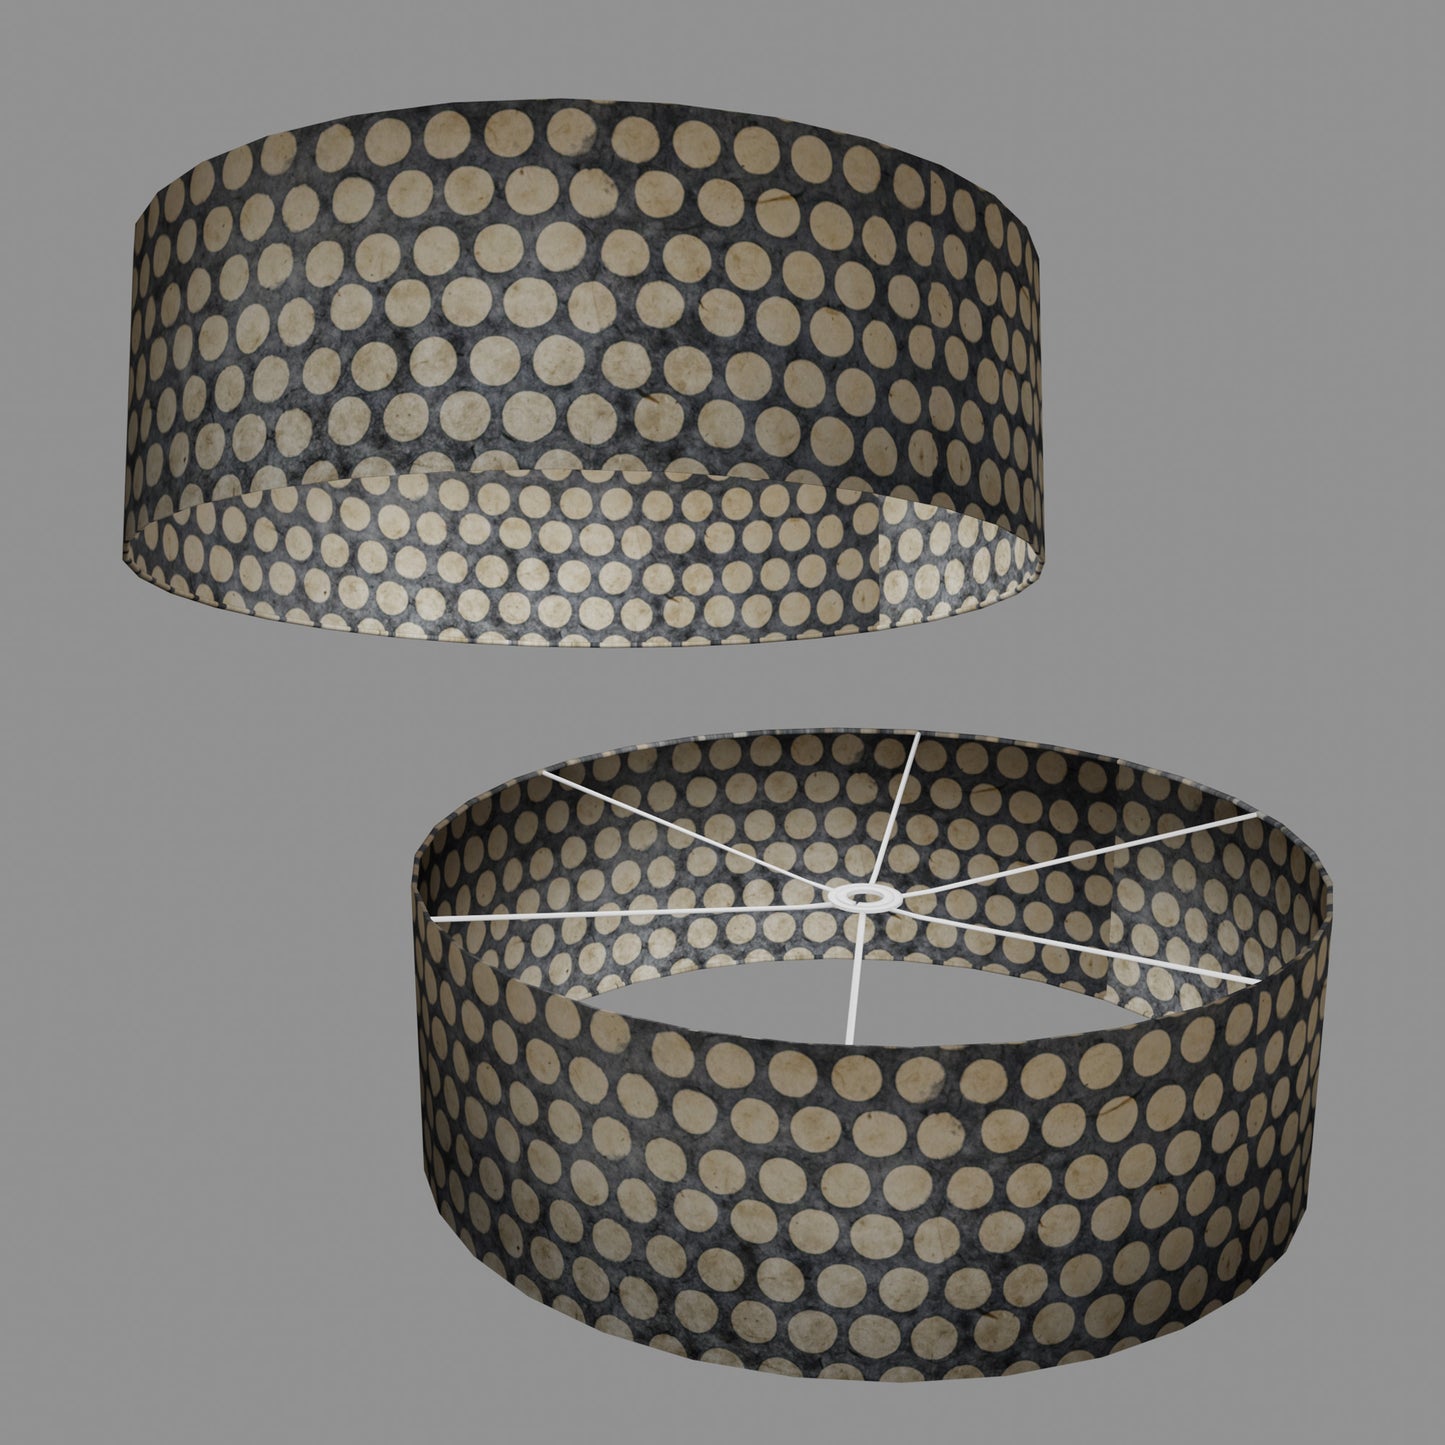 Drum Lamp Shade - P78 - Batik Dots on Grey, 60cm(d) x 20cm(h)